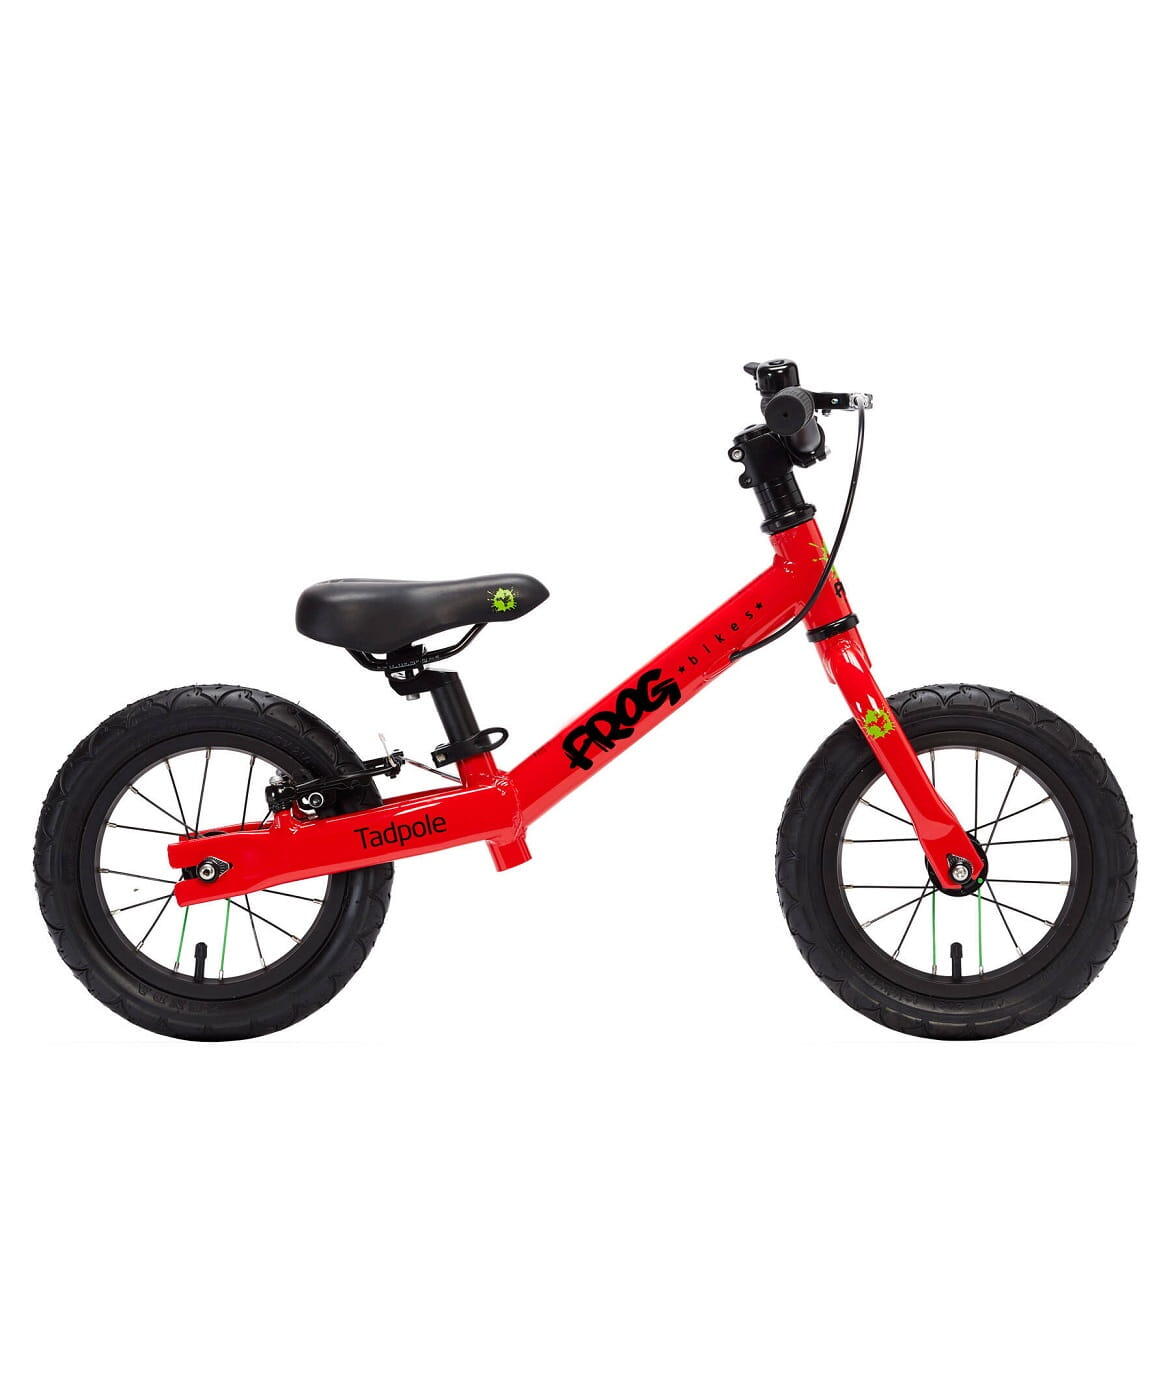 Tadpole 12 Inch Lightweight Kids Balance Bike For 2-3 Years - Red 1/6